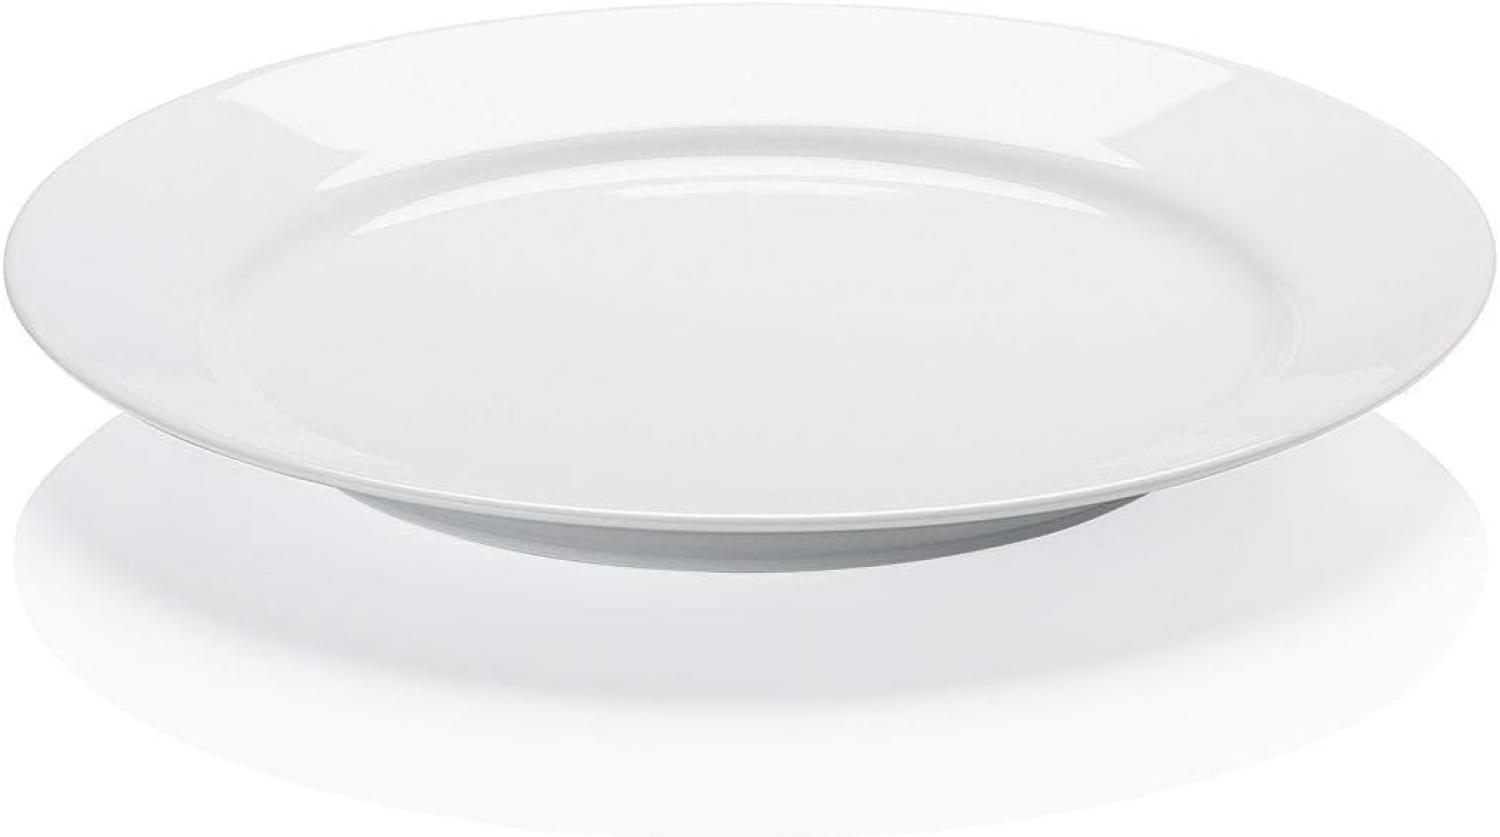 Arzberg Cucina Teller flach, Porzellan, Bianca, 28 cm, 42116-800001-10868 Bild 1